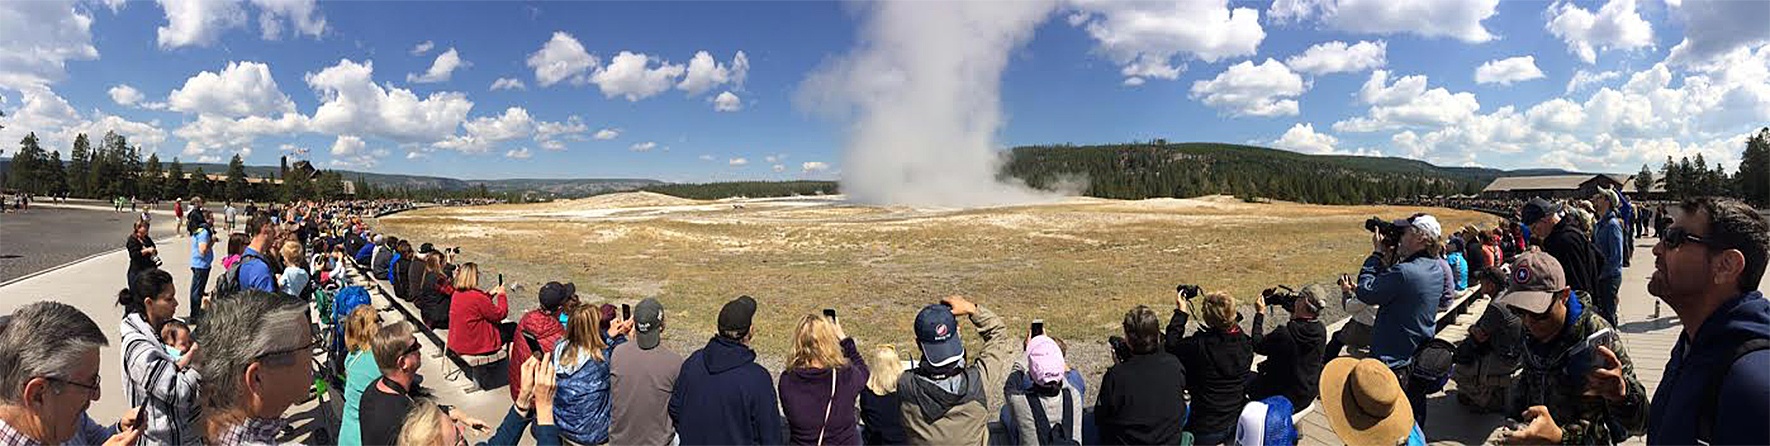 Old Faithful geyser at Yellowstone National Park in Montana Courtesy Sean Smith